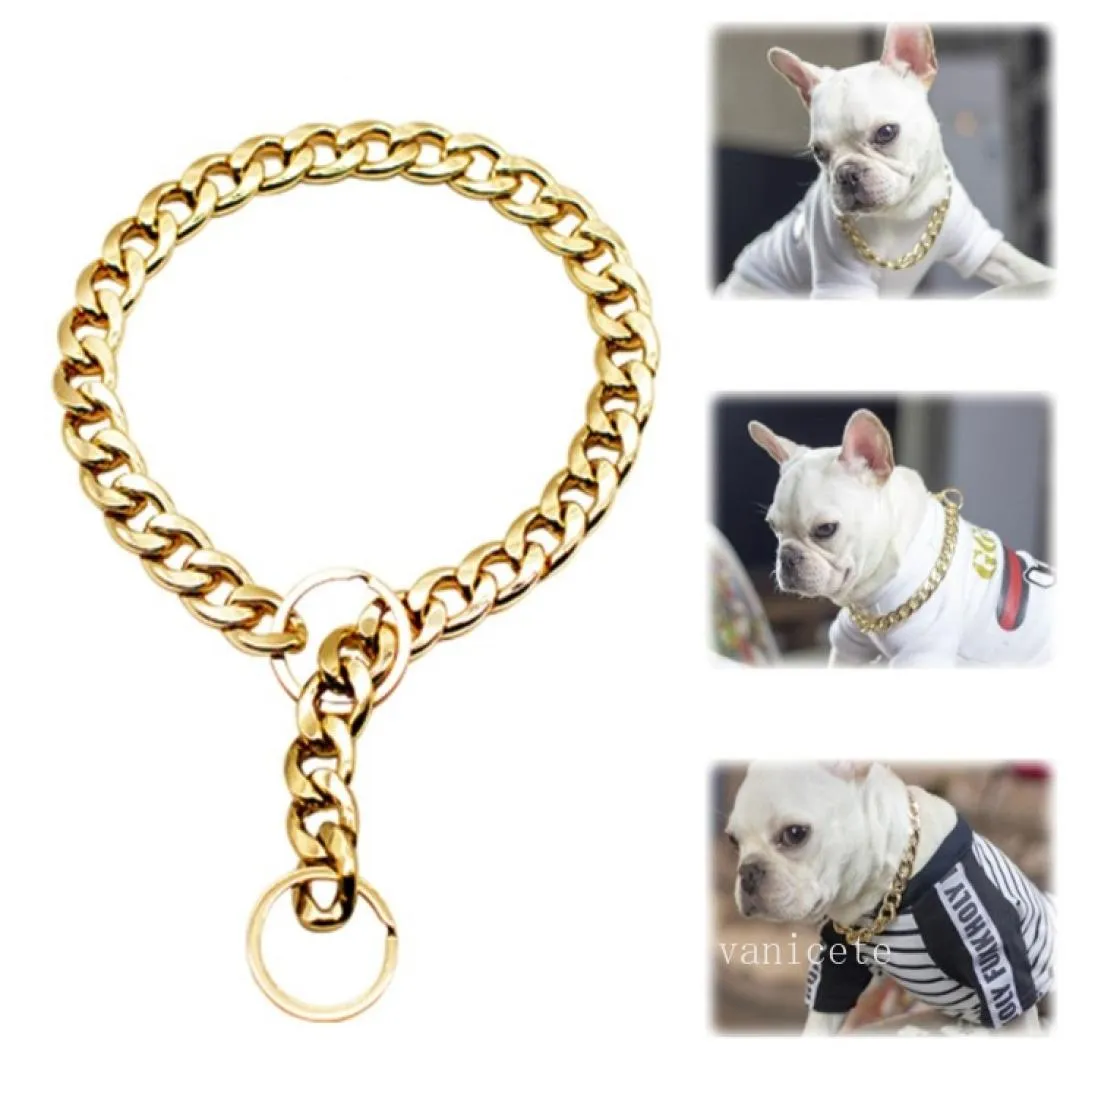 Hundhalsar metall stor guld färgkedja sommar husdjur mode tillbehör bulldog krage små hundar husdjur halsband zc4952838040